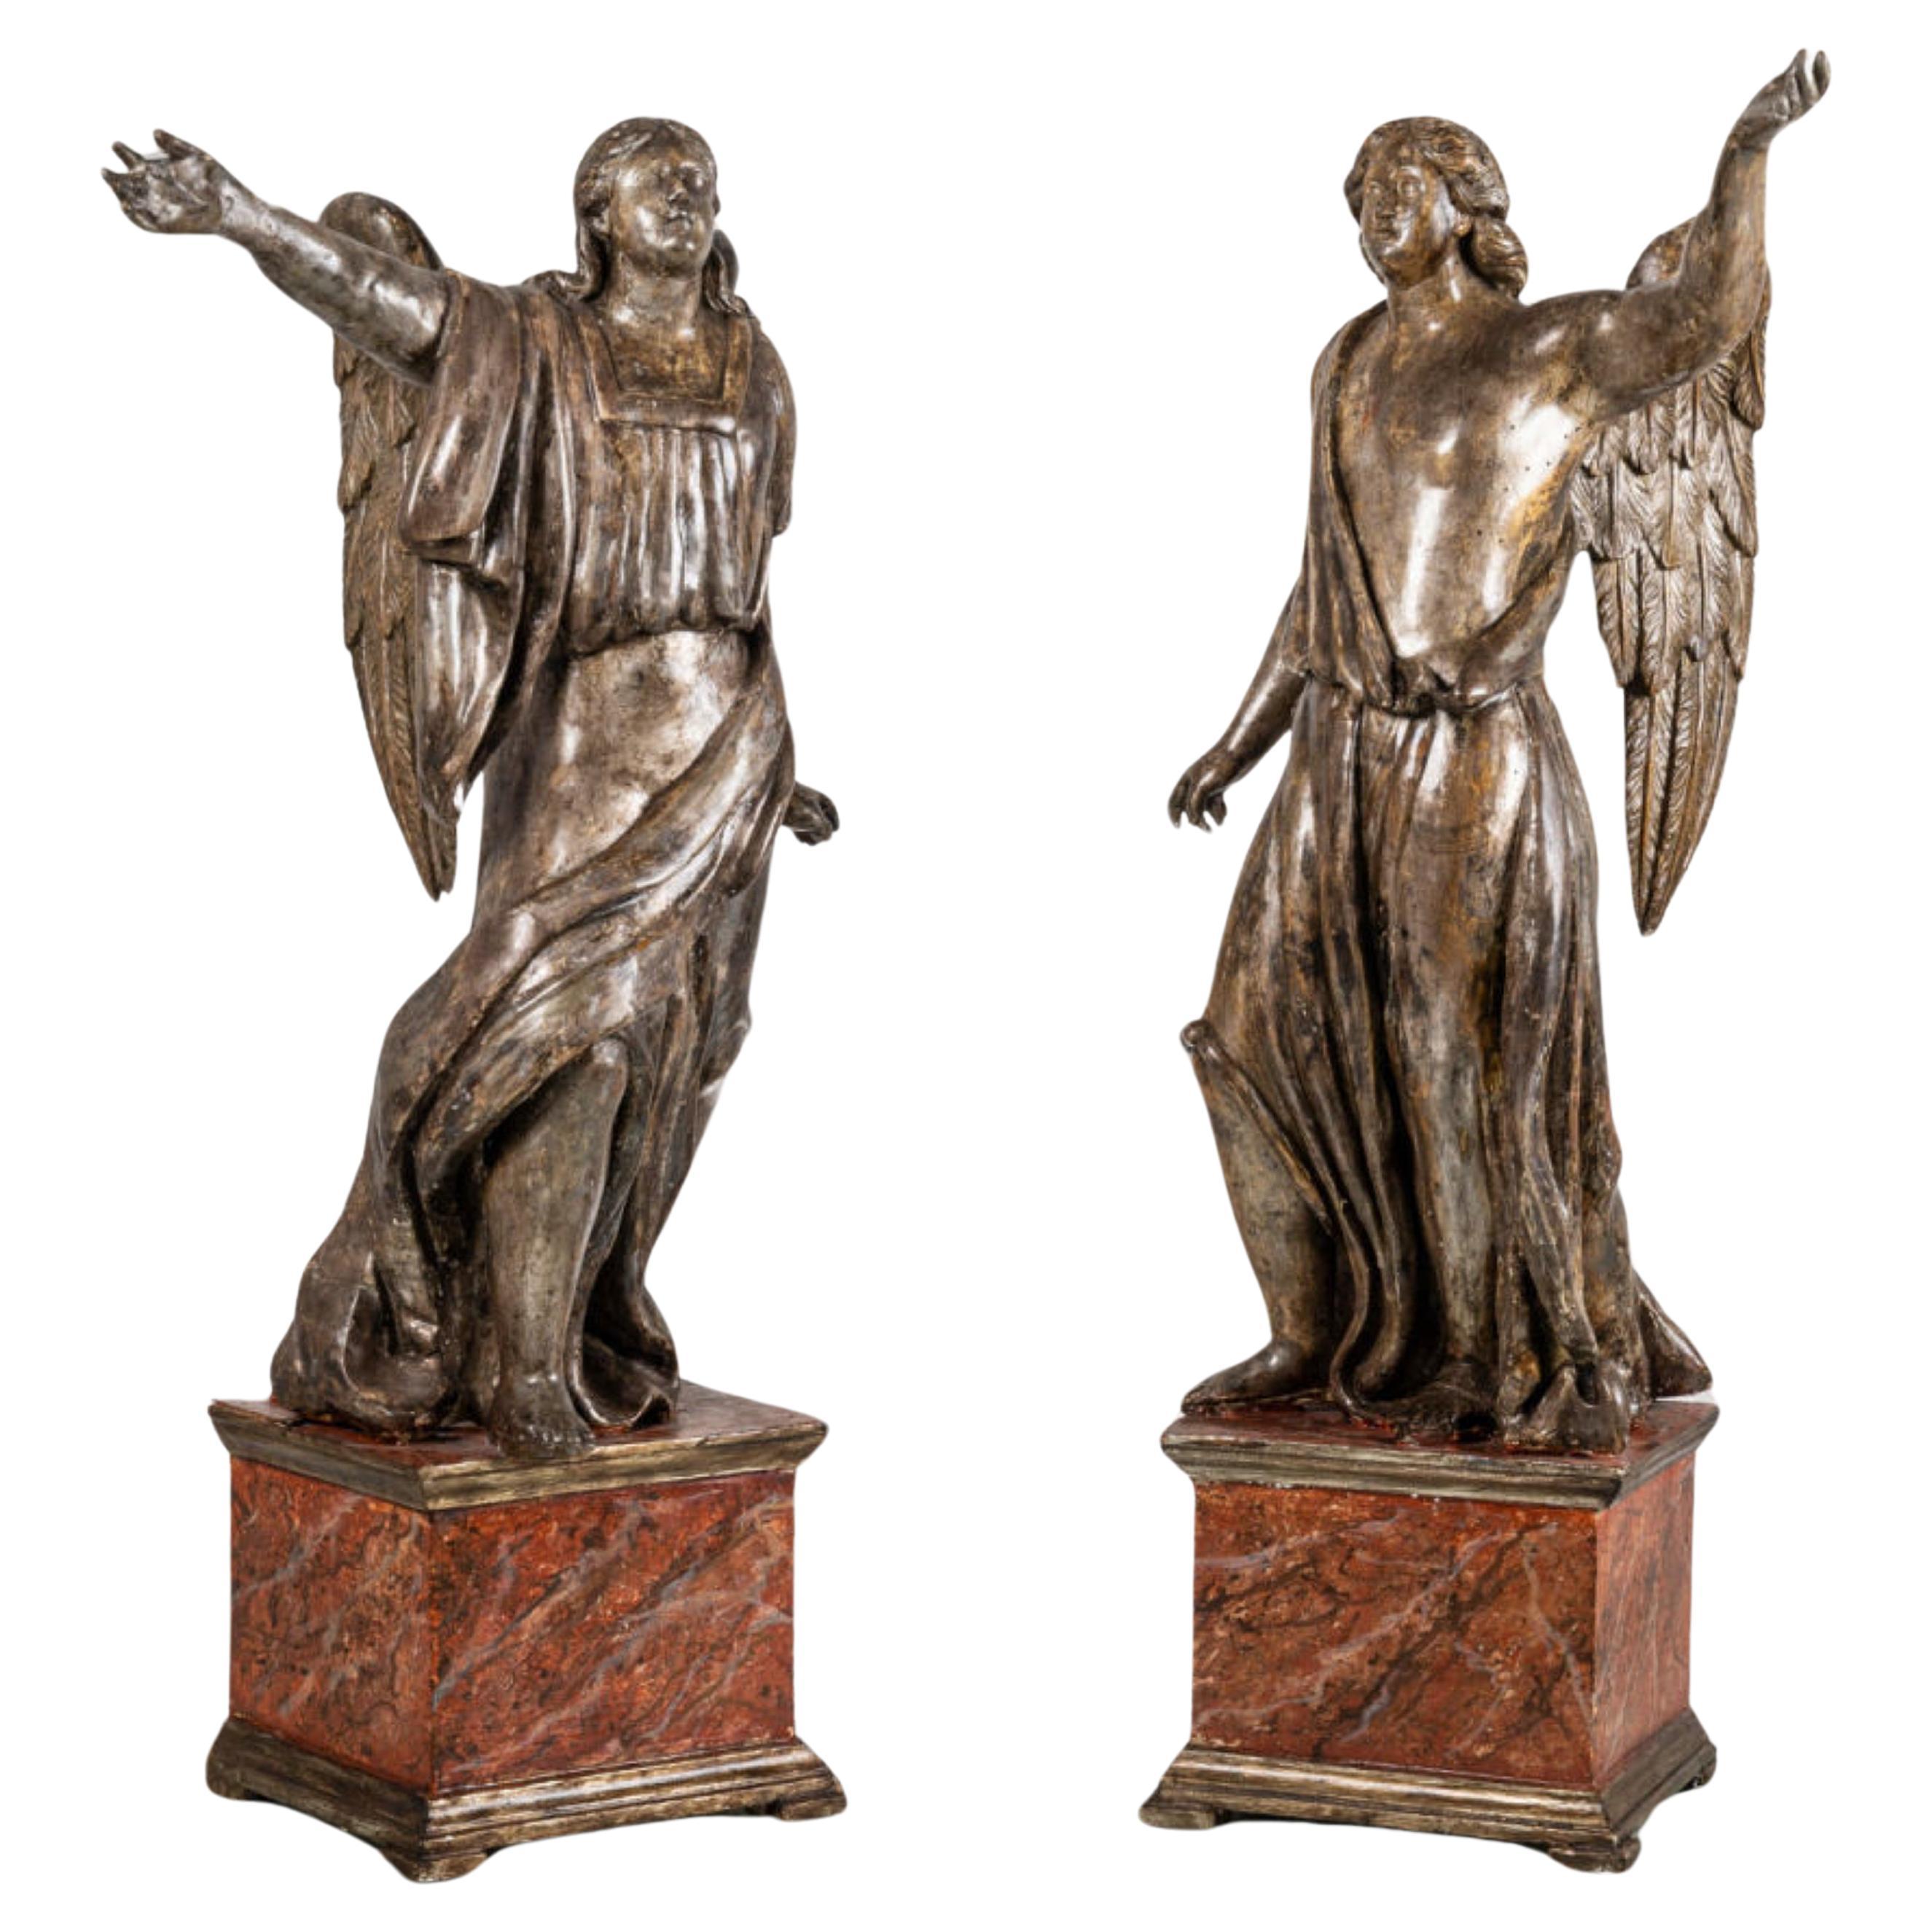 CENTRAL ITALY SCHOOL, Paar Skulpturen, Louis XIV.-Stil  „Engel“ Ende des 17. Jahrhunderts